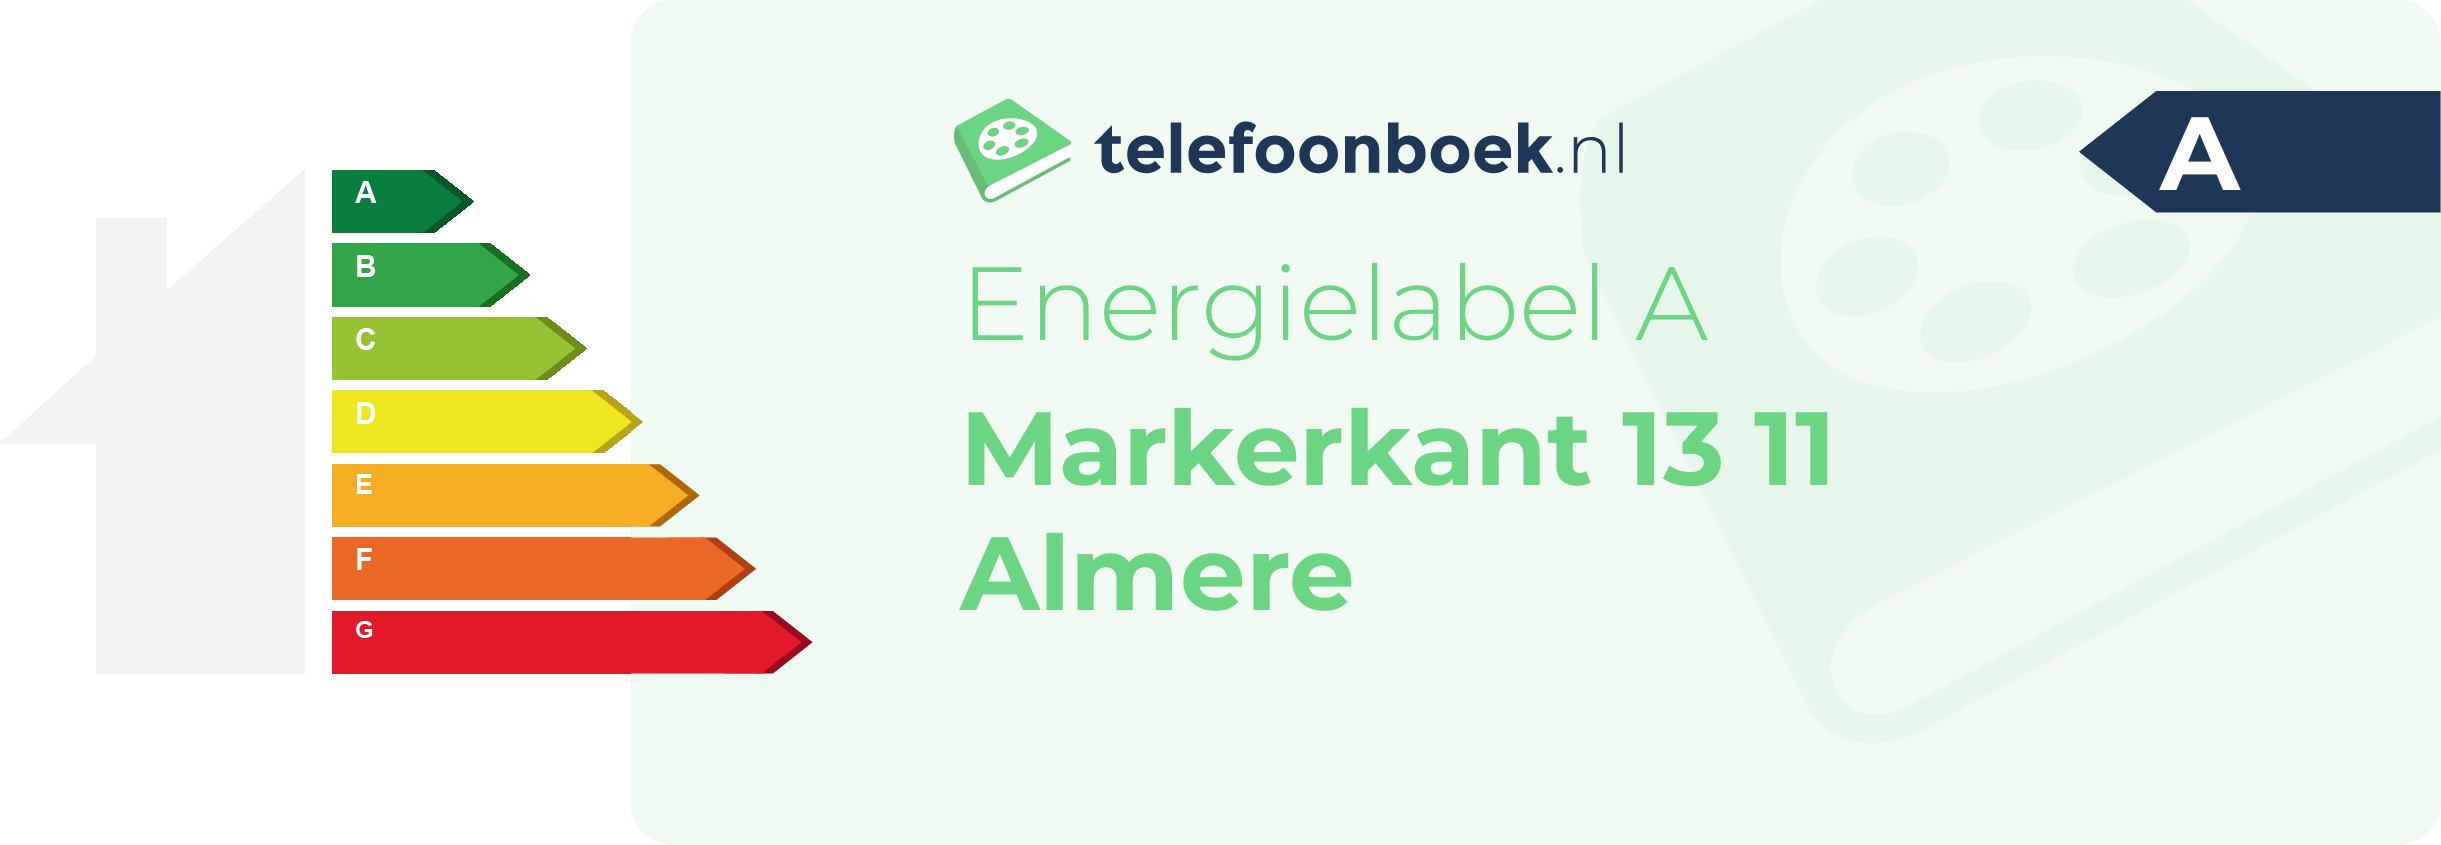 Energielabel Markerkant 13 11 Almere